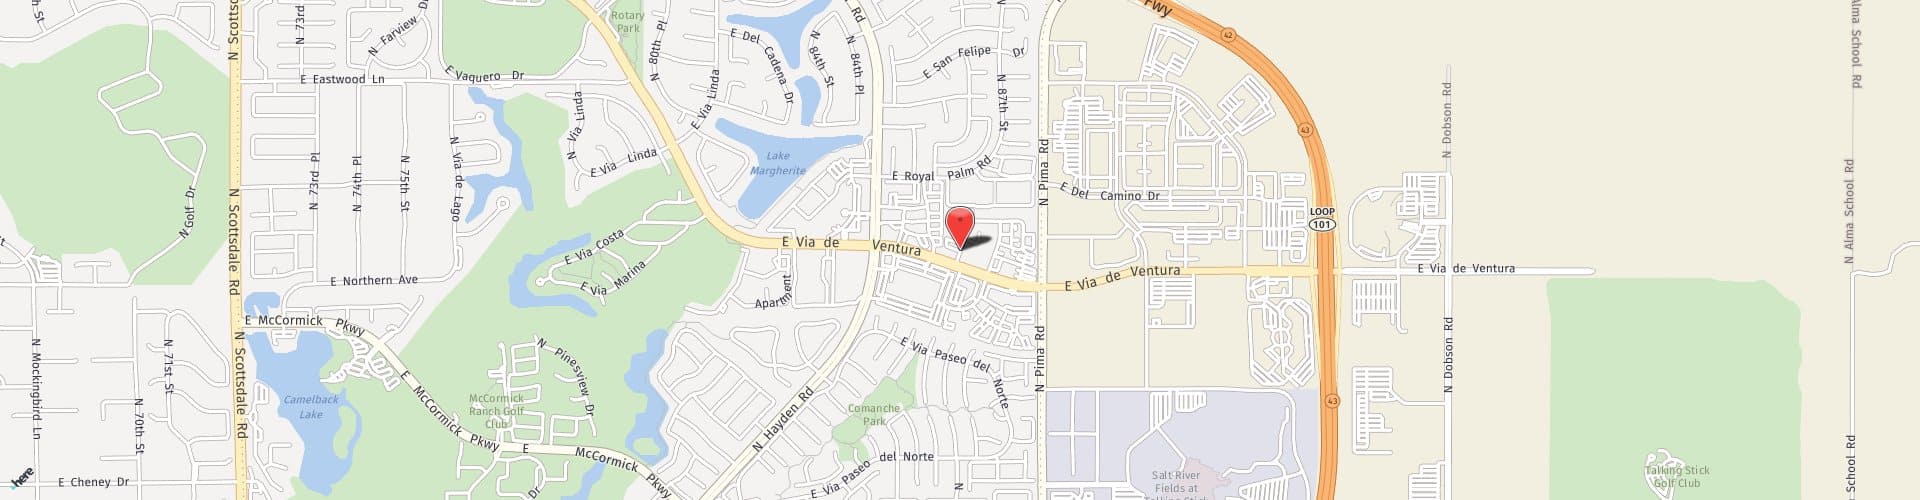 Location Map: 8700 East Vía de Ventura Scottsdale, AZ 85258